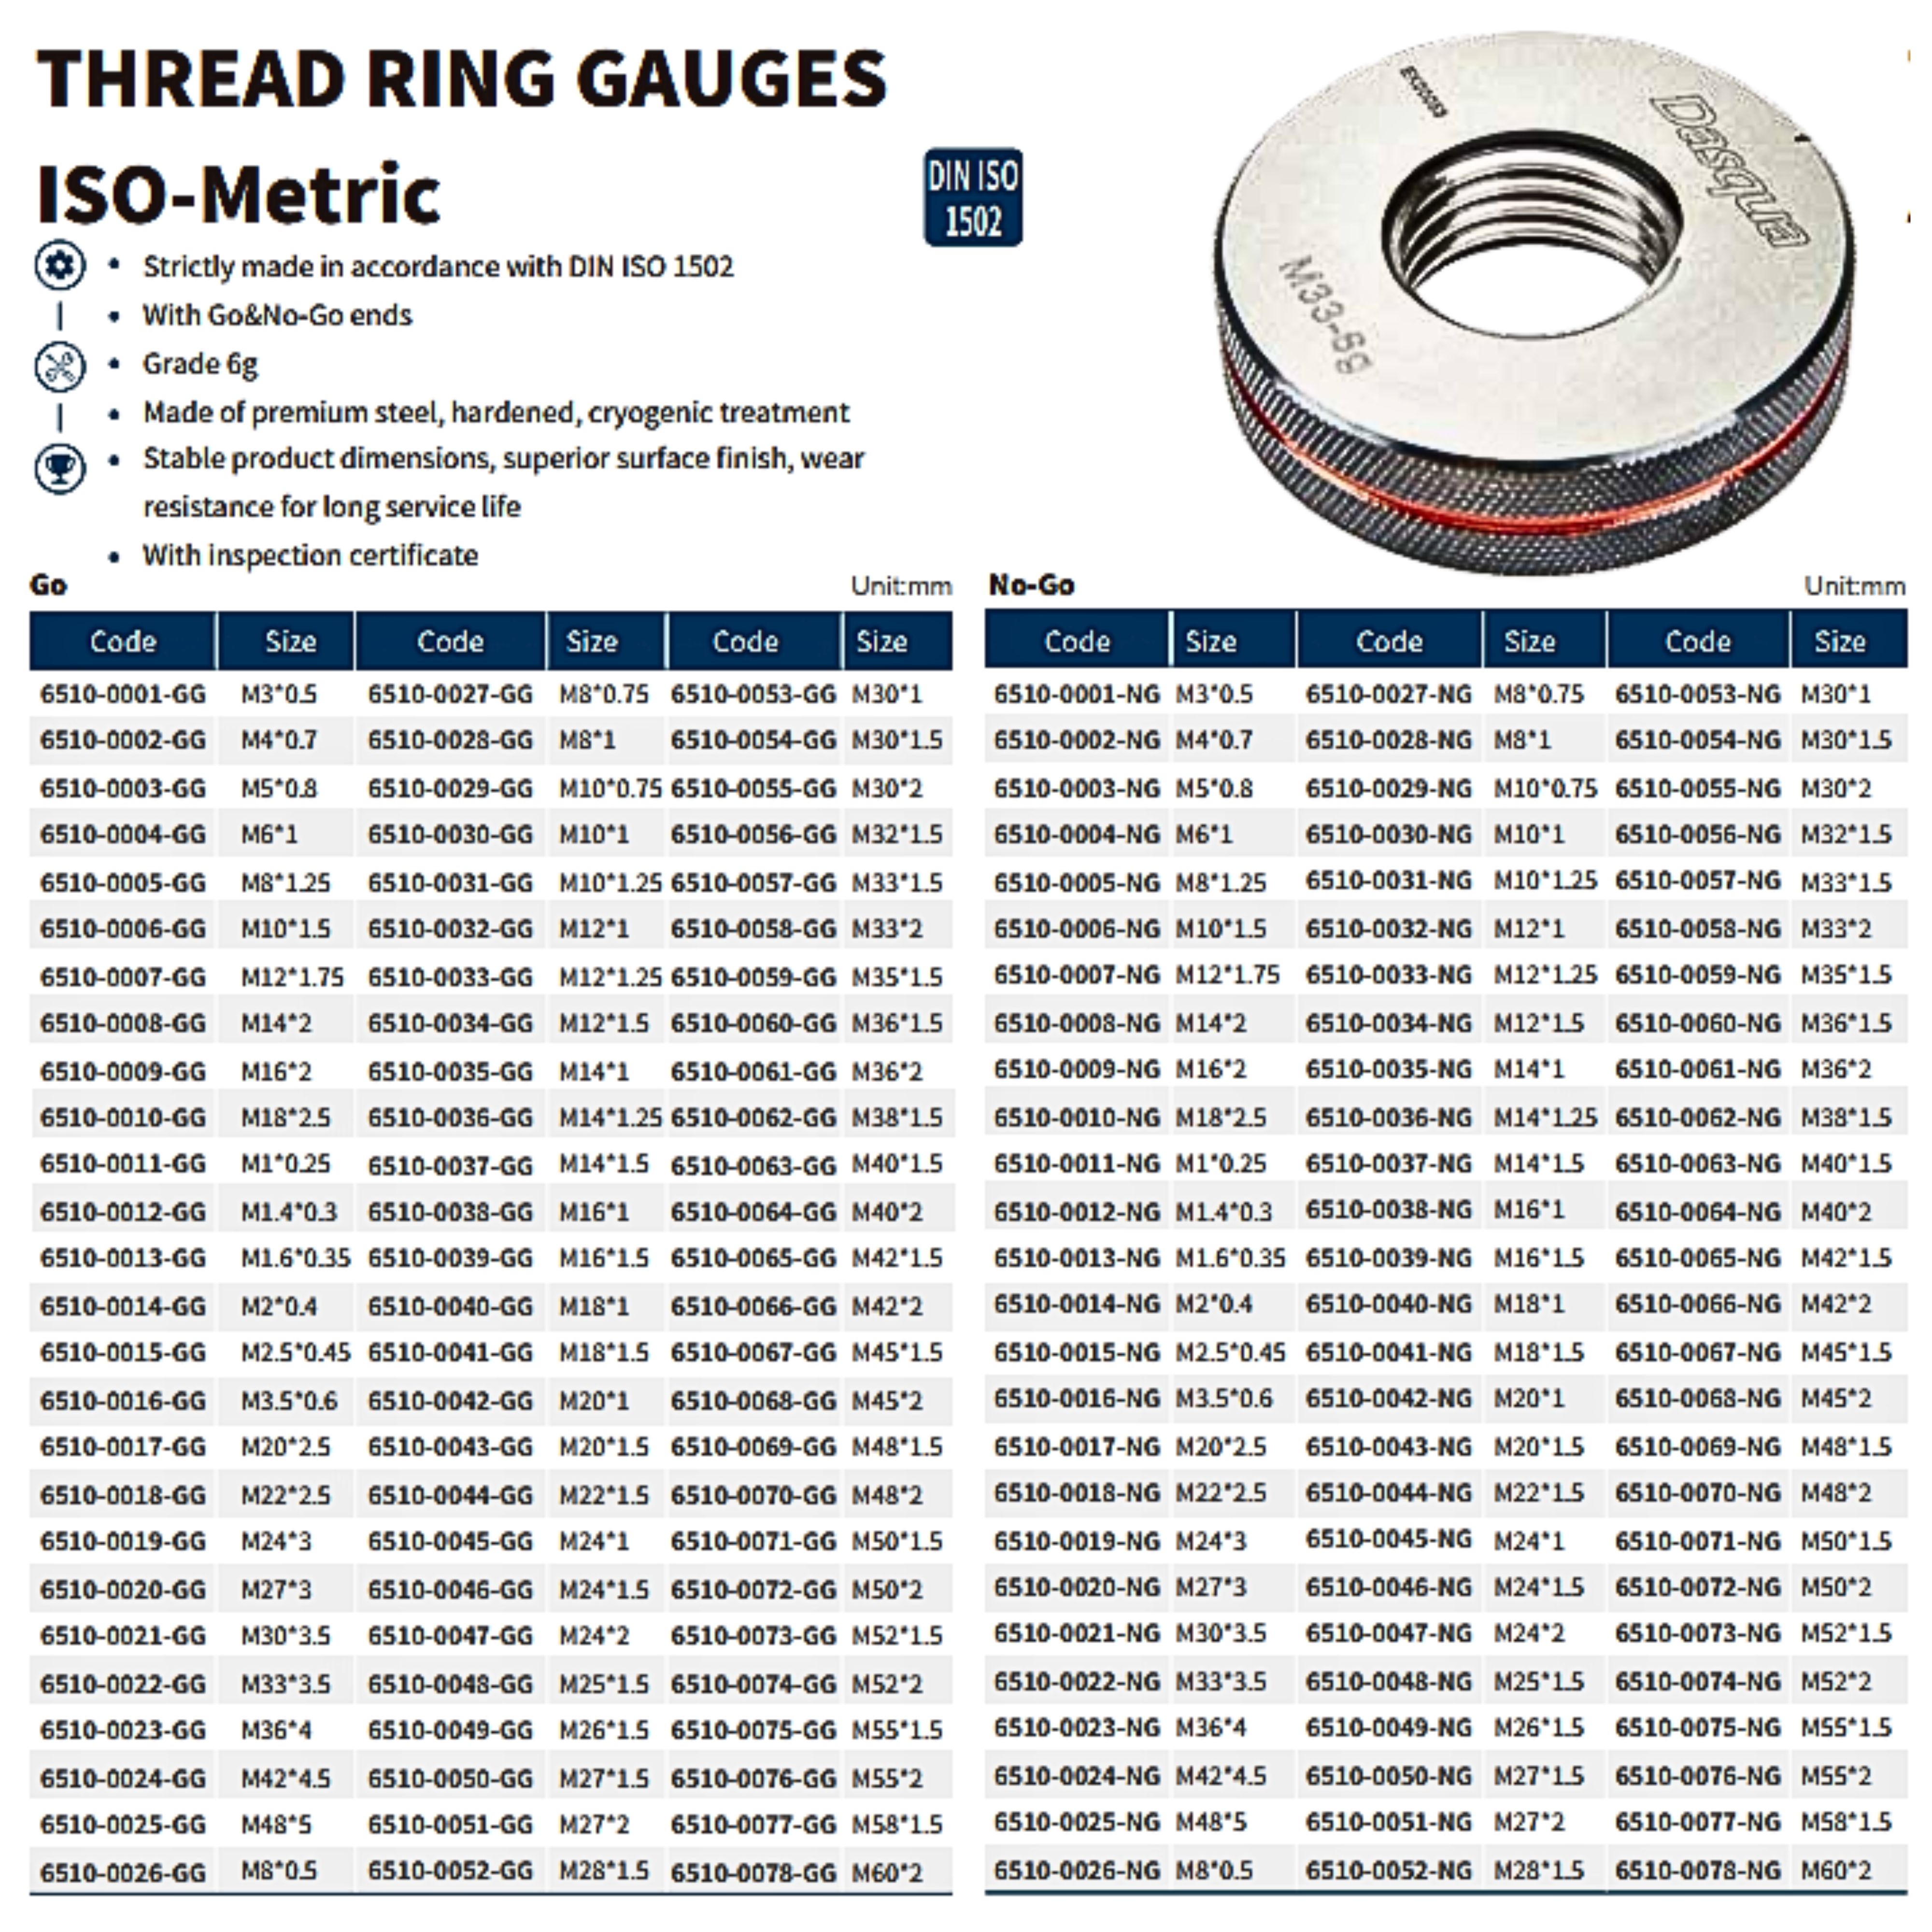 ISO-METRIC THREAD RING GAUGES